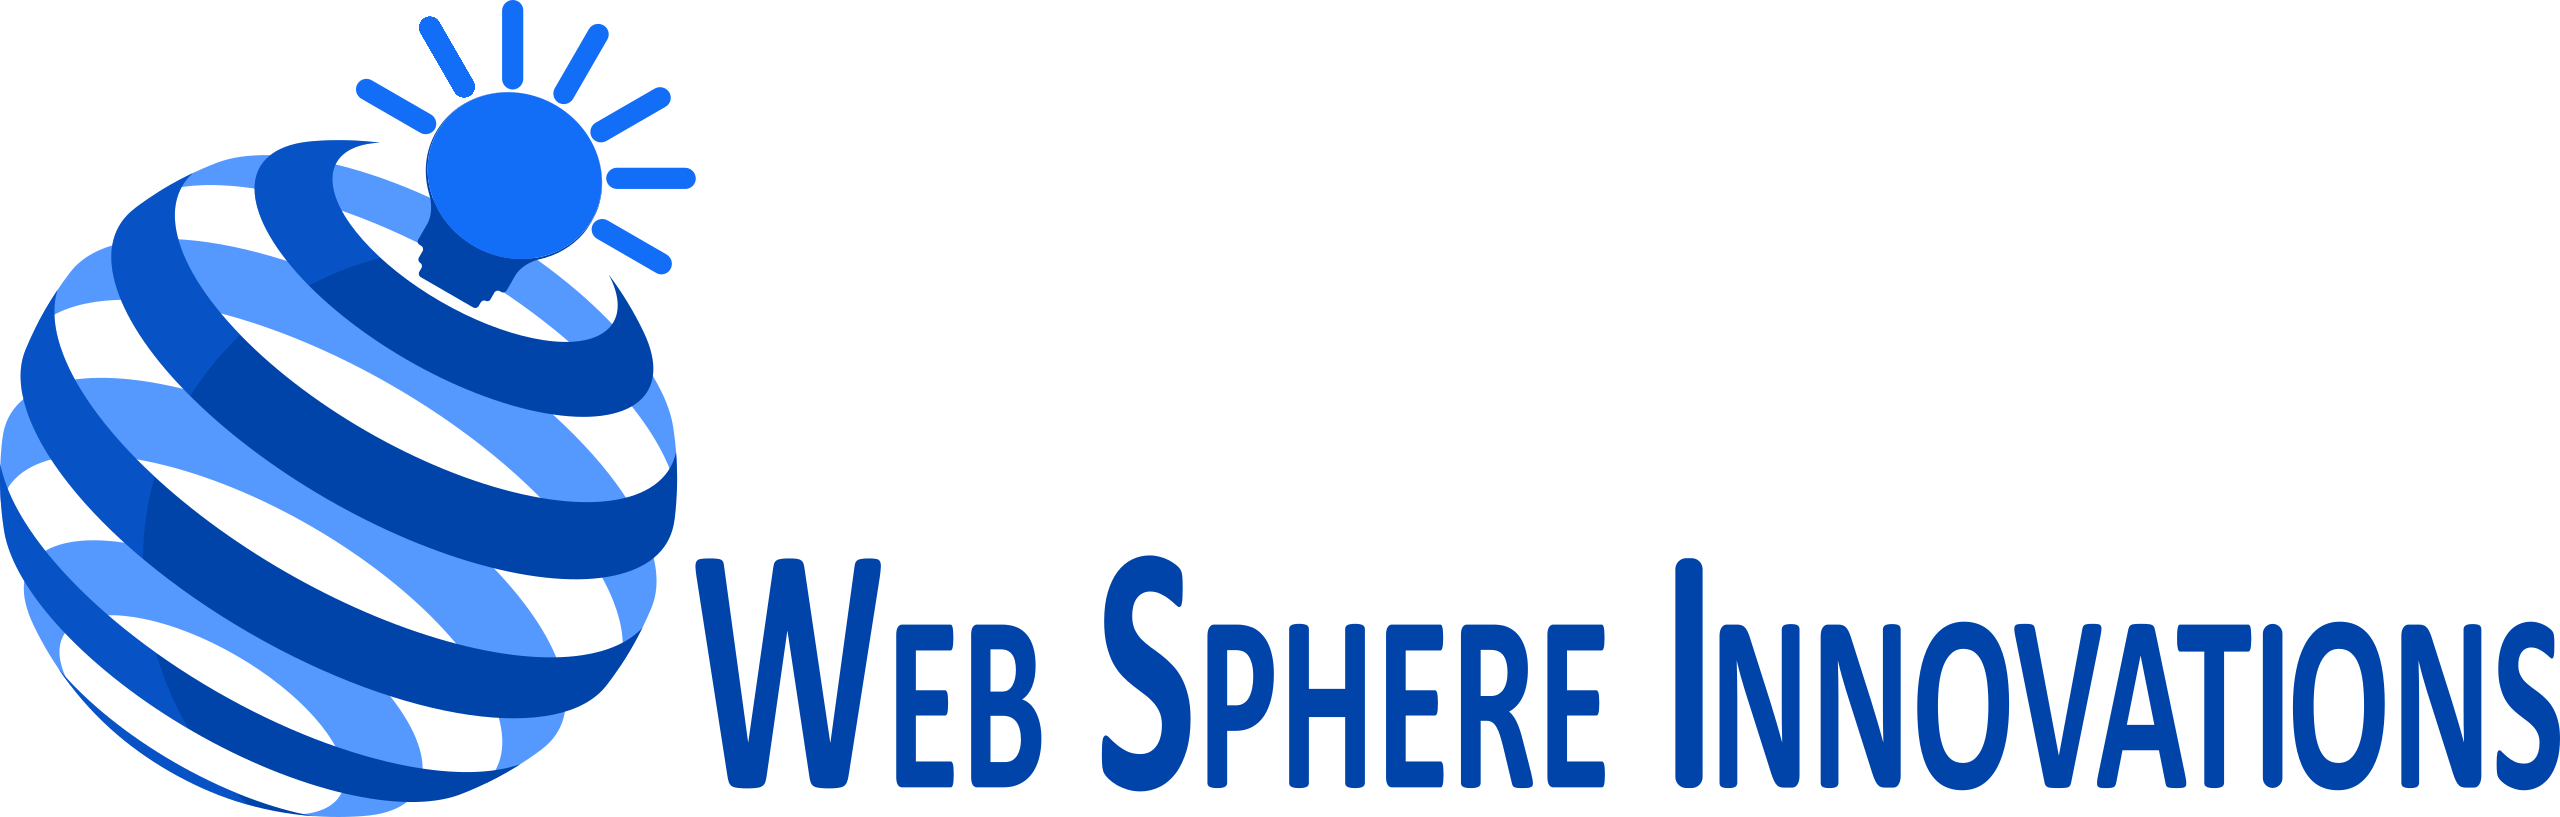 Web Sphere Innovations